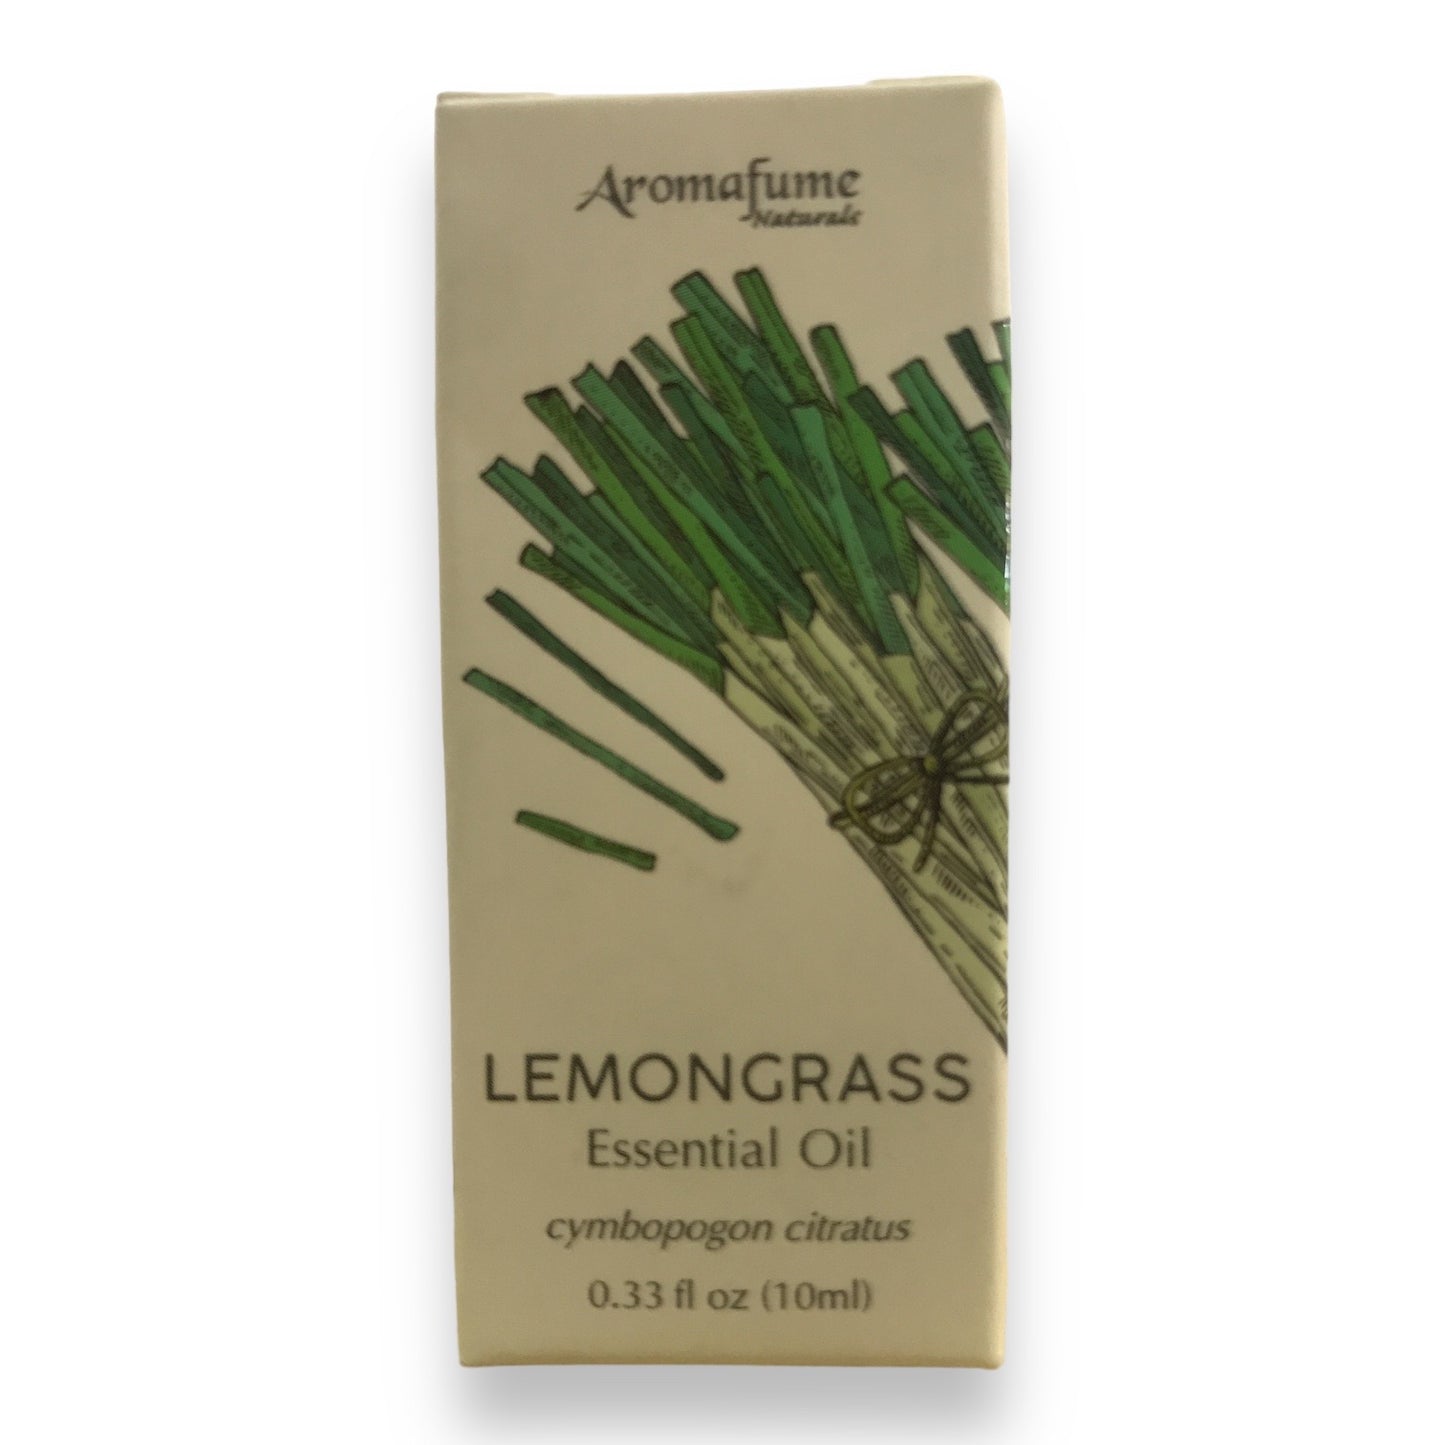 Soothe - Lemongrass Essential Oil